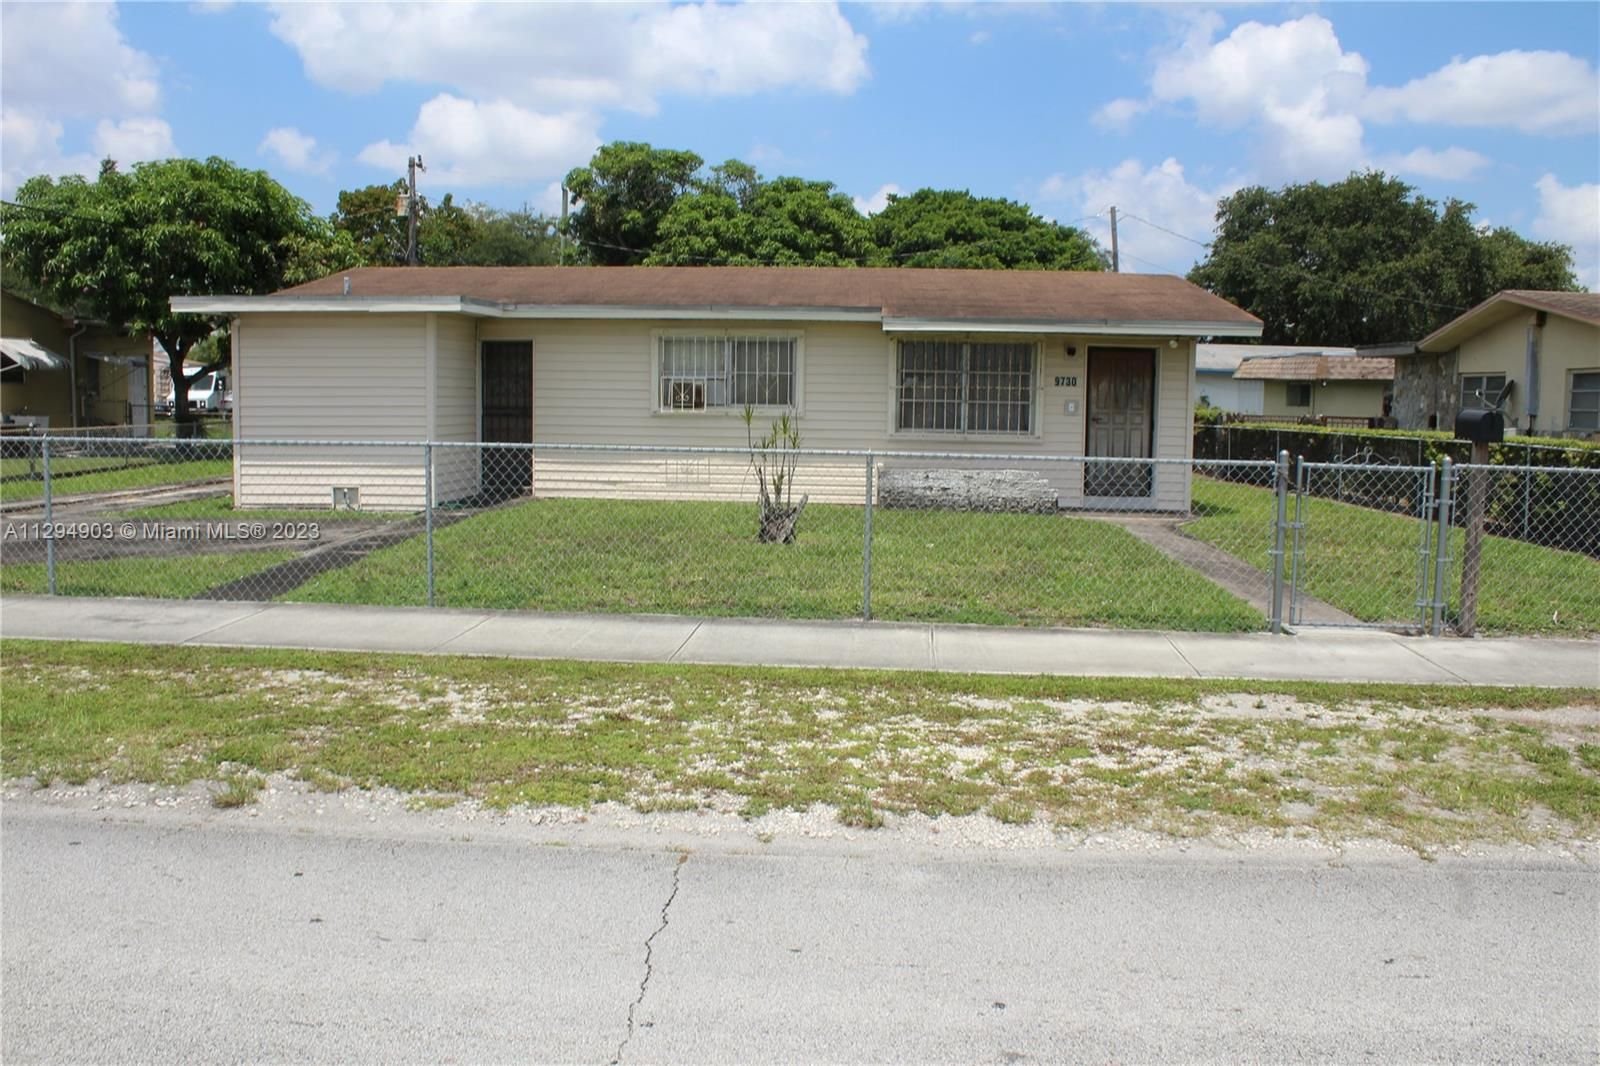 Real estate property located at 9730 19th Ave, Miami-Dade County, Miami, FL